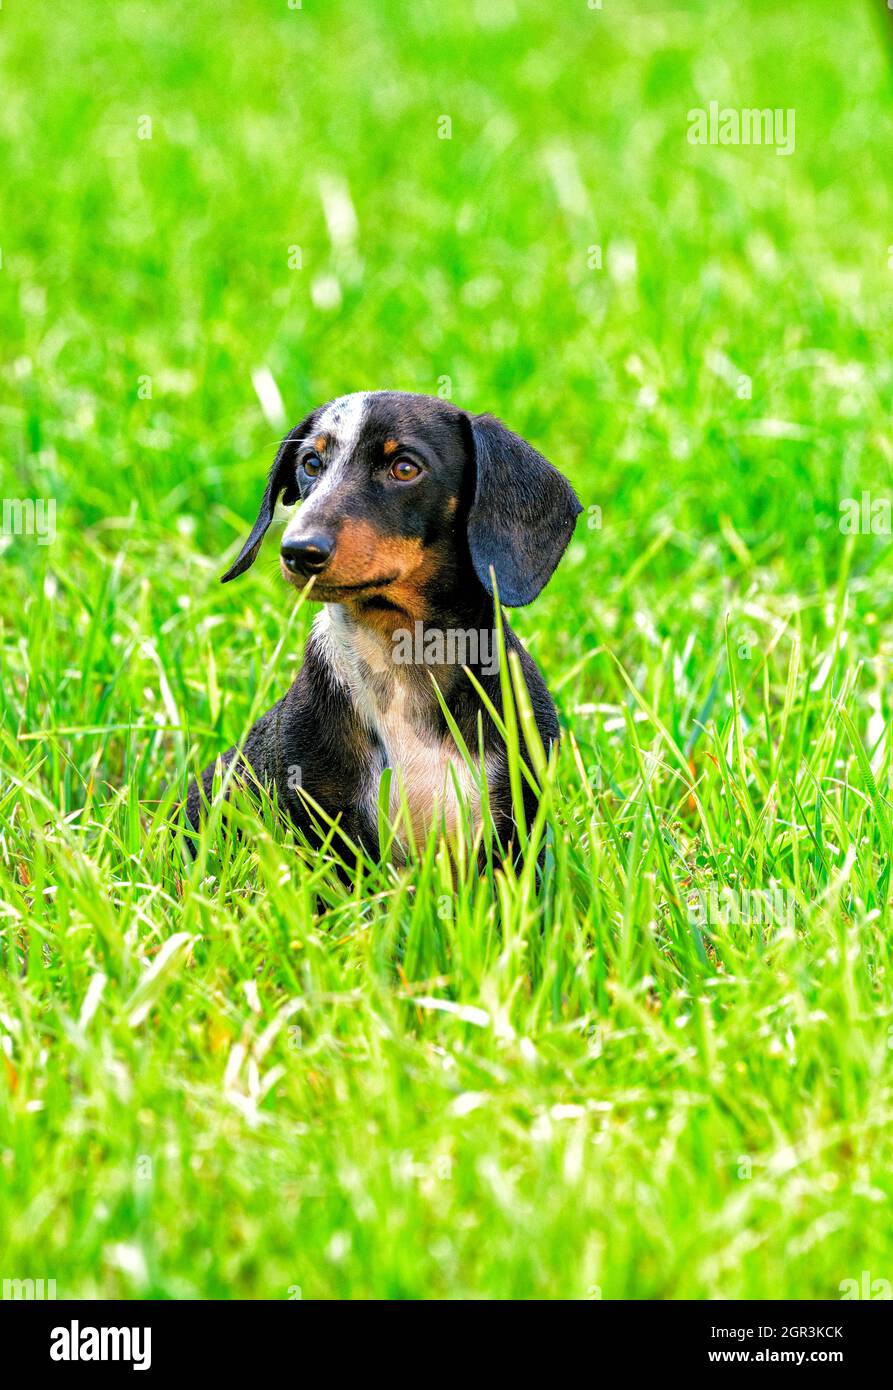 Miniature Black and Tan Dapple Dachshund posing in a grassy field Stock Photo